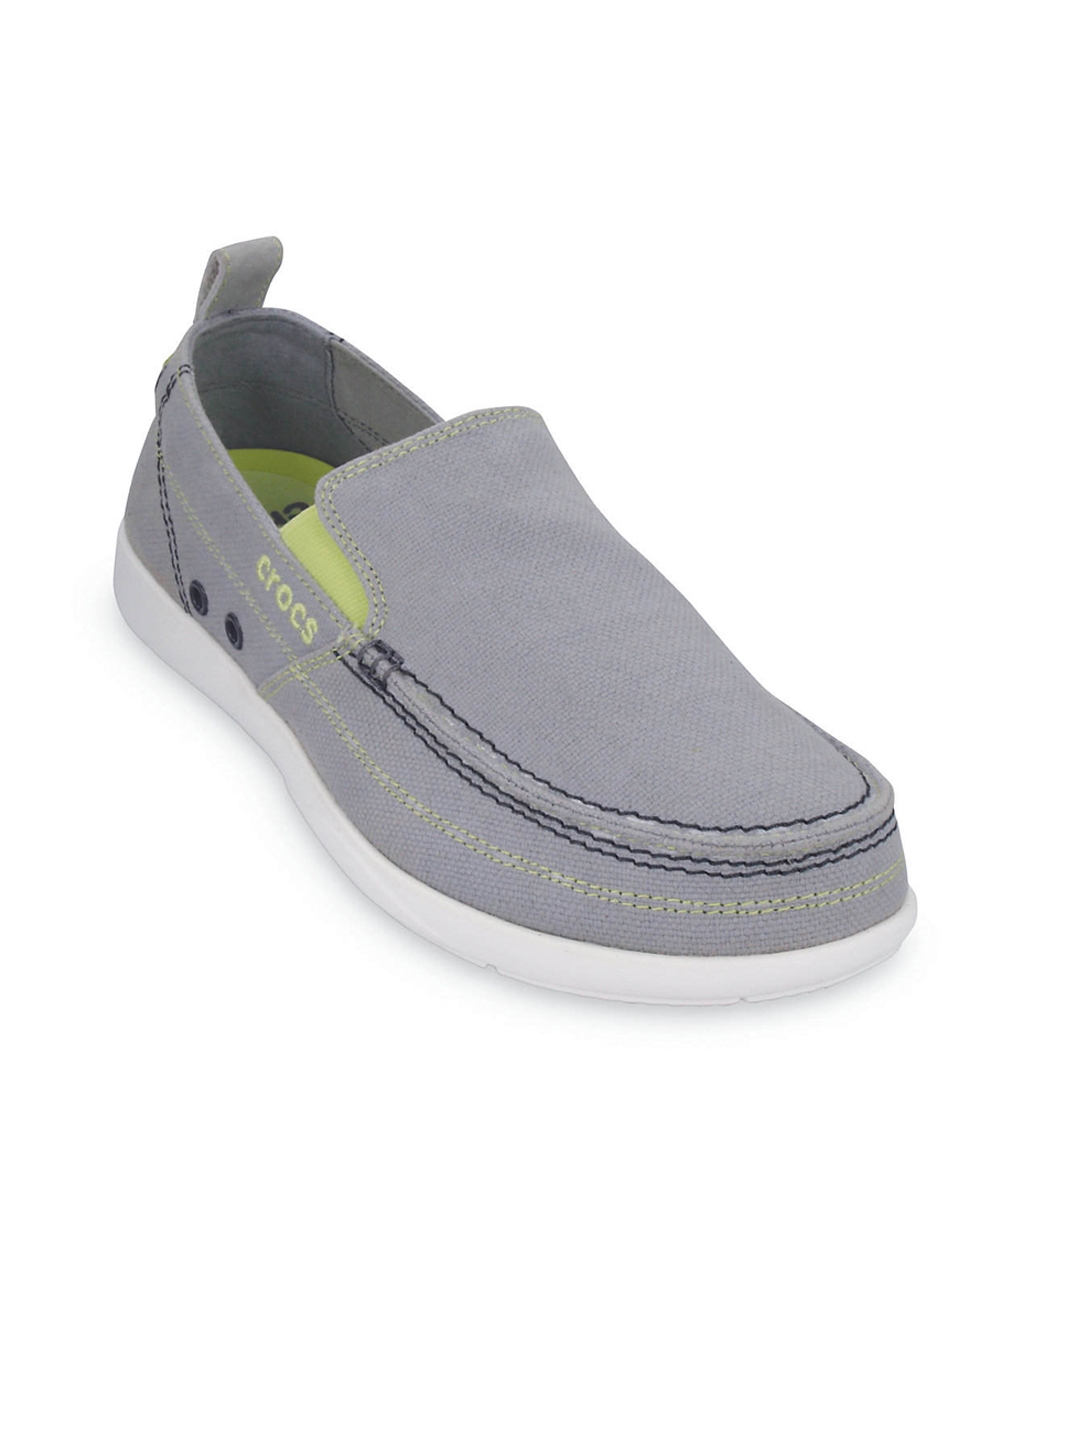 Buy Crocs Men Grey Casual Shoes 